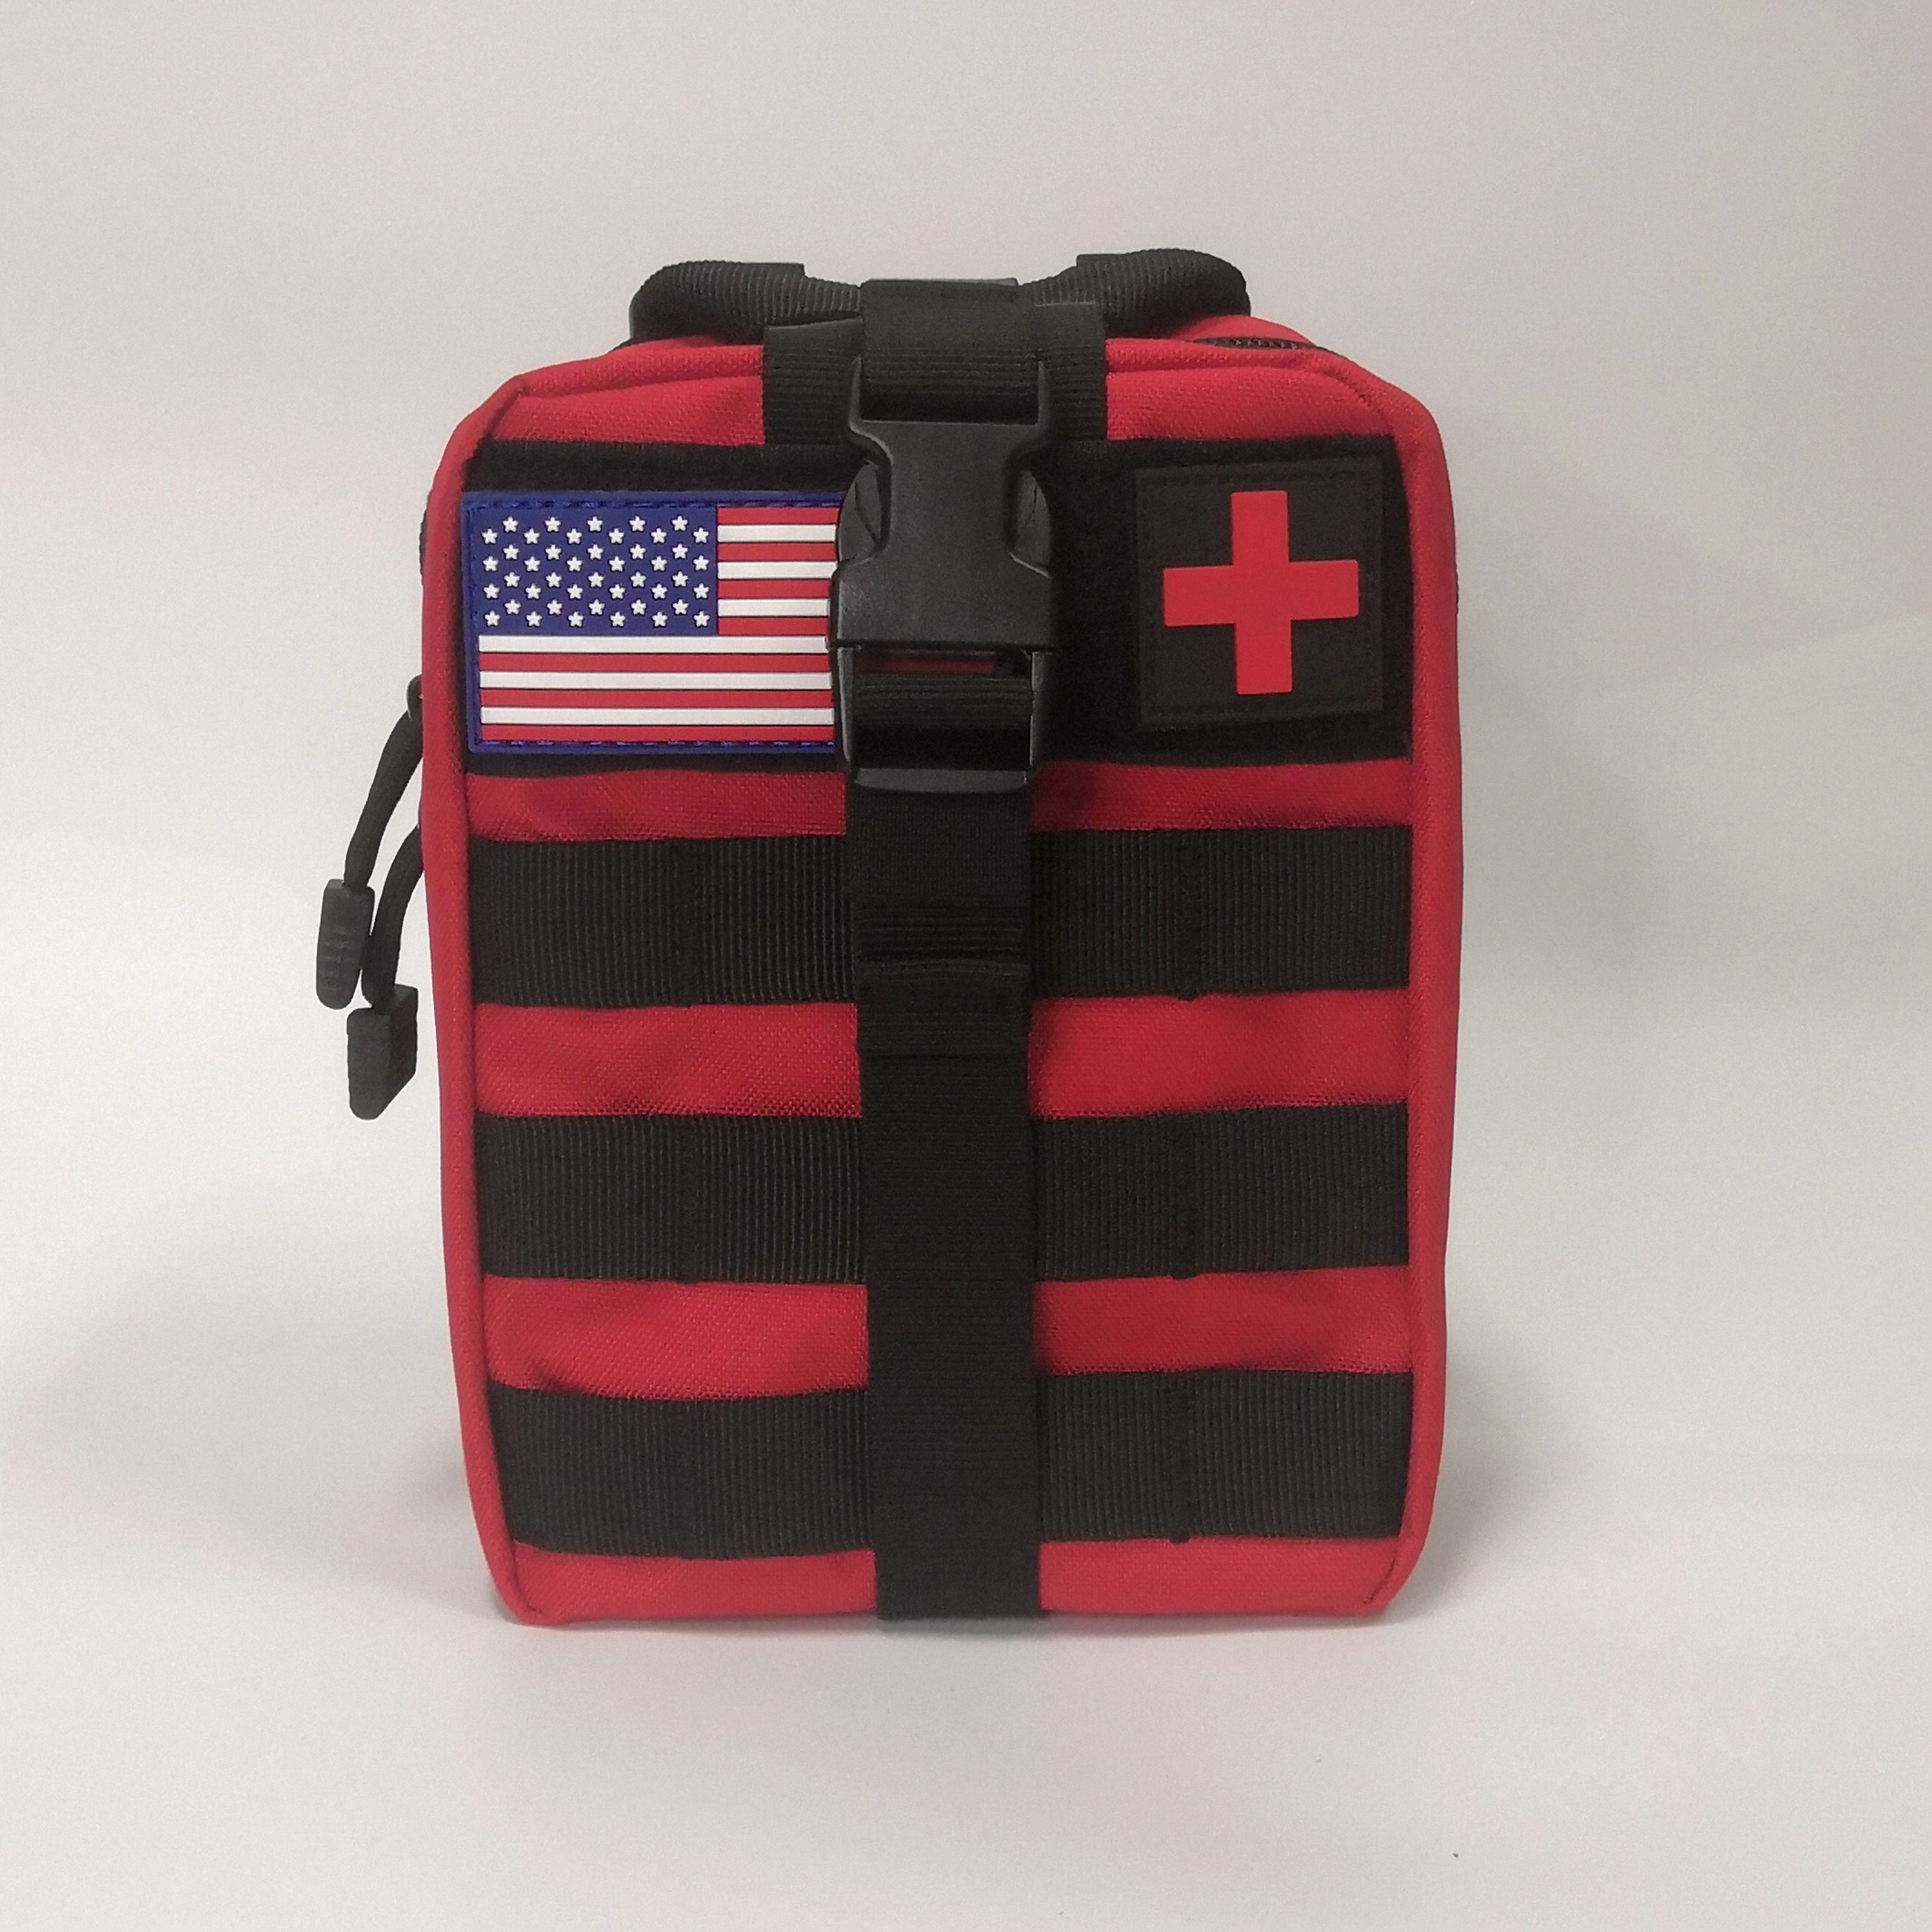 Mini bolsa Molle para aficionados del ejército, Kit de accesorios